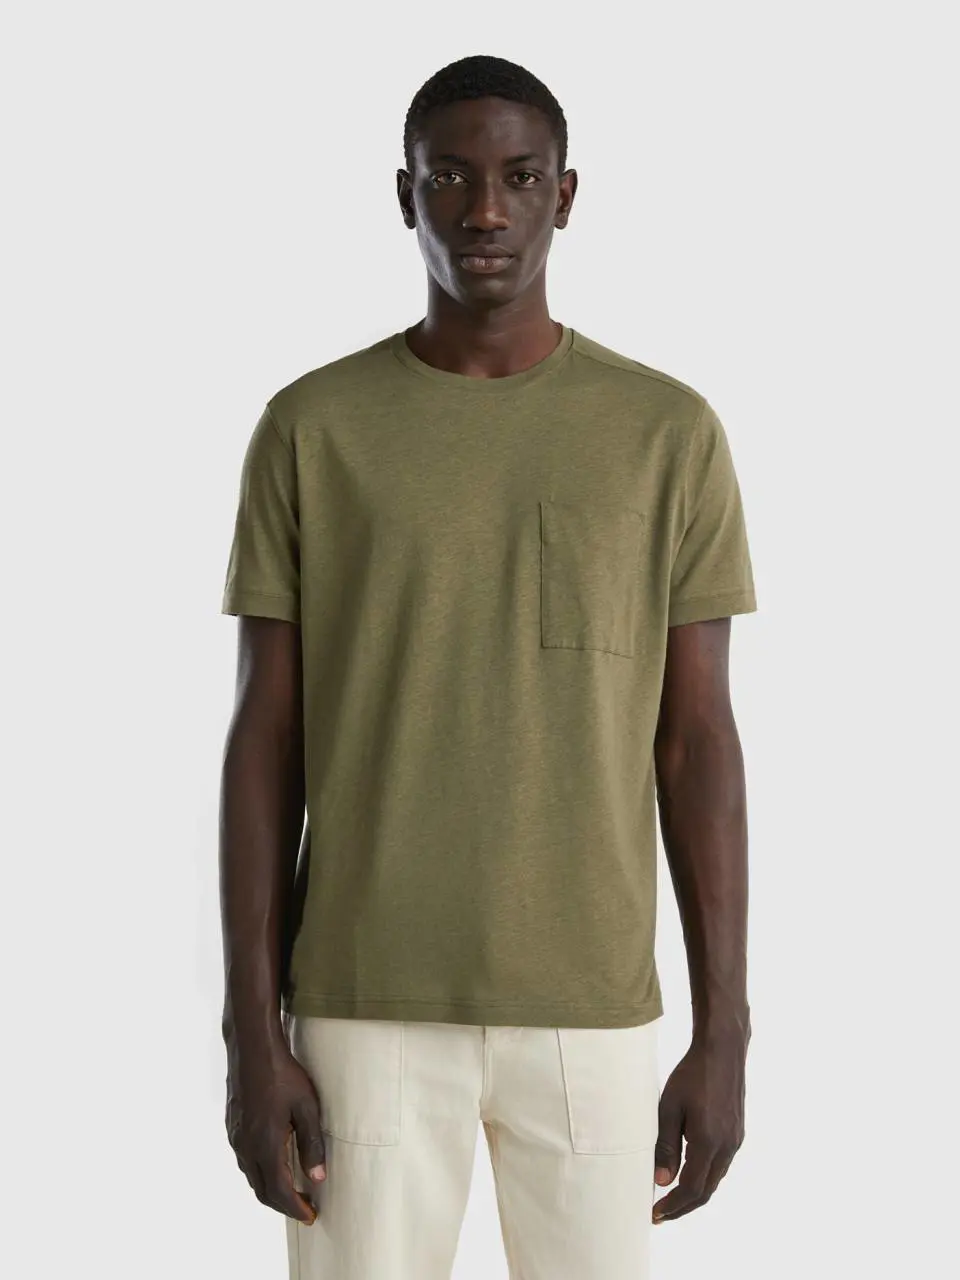 Benetton t-shirt in linen blend with pocket. 1